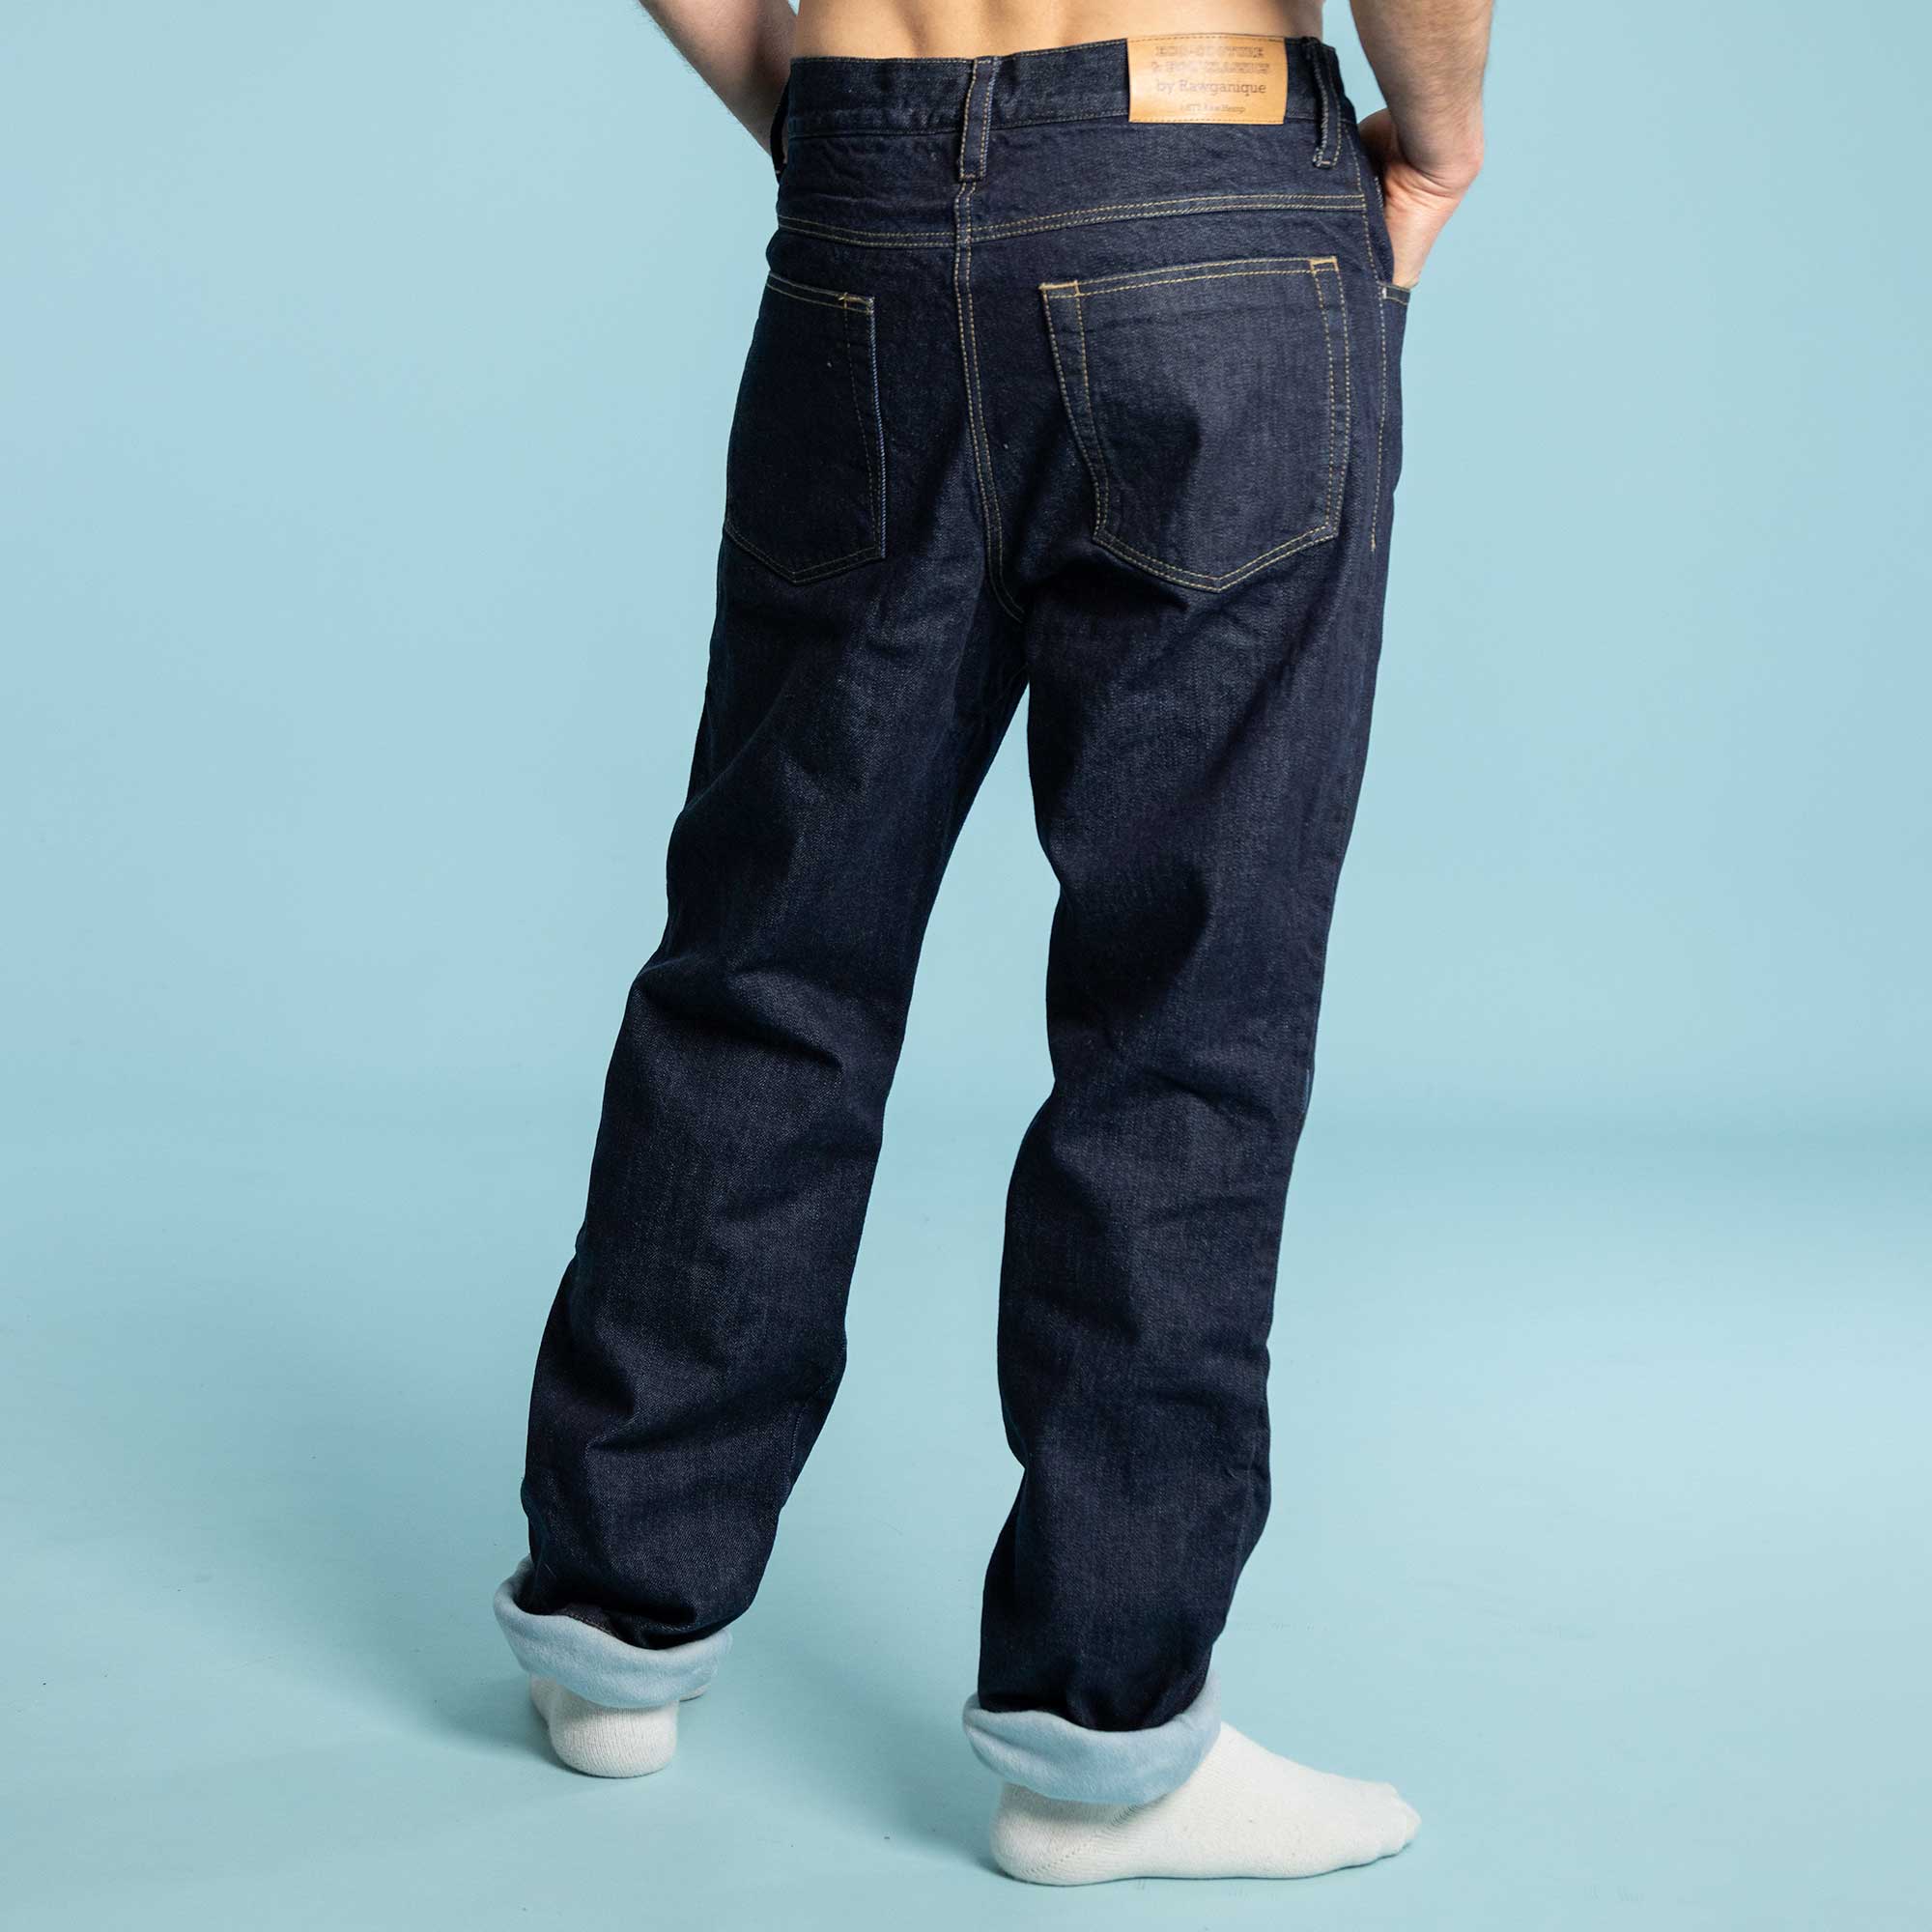 Buy Kids Boys' Warm Fleece Lined Elastic Waist Denim Pants Jeans for Little  & Toddler Boys, Denim Black, 18-24 Months = Tag 90 at Amazon.in